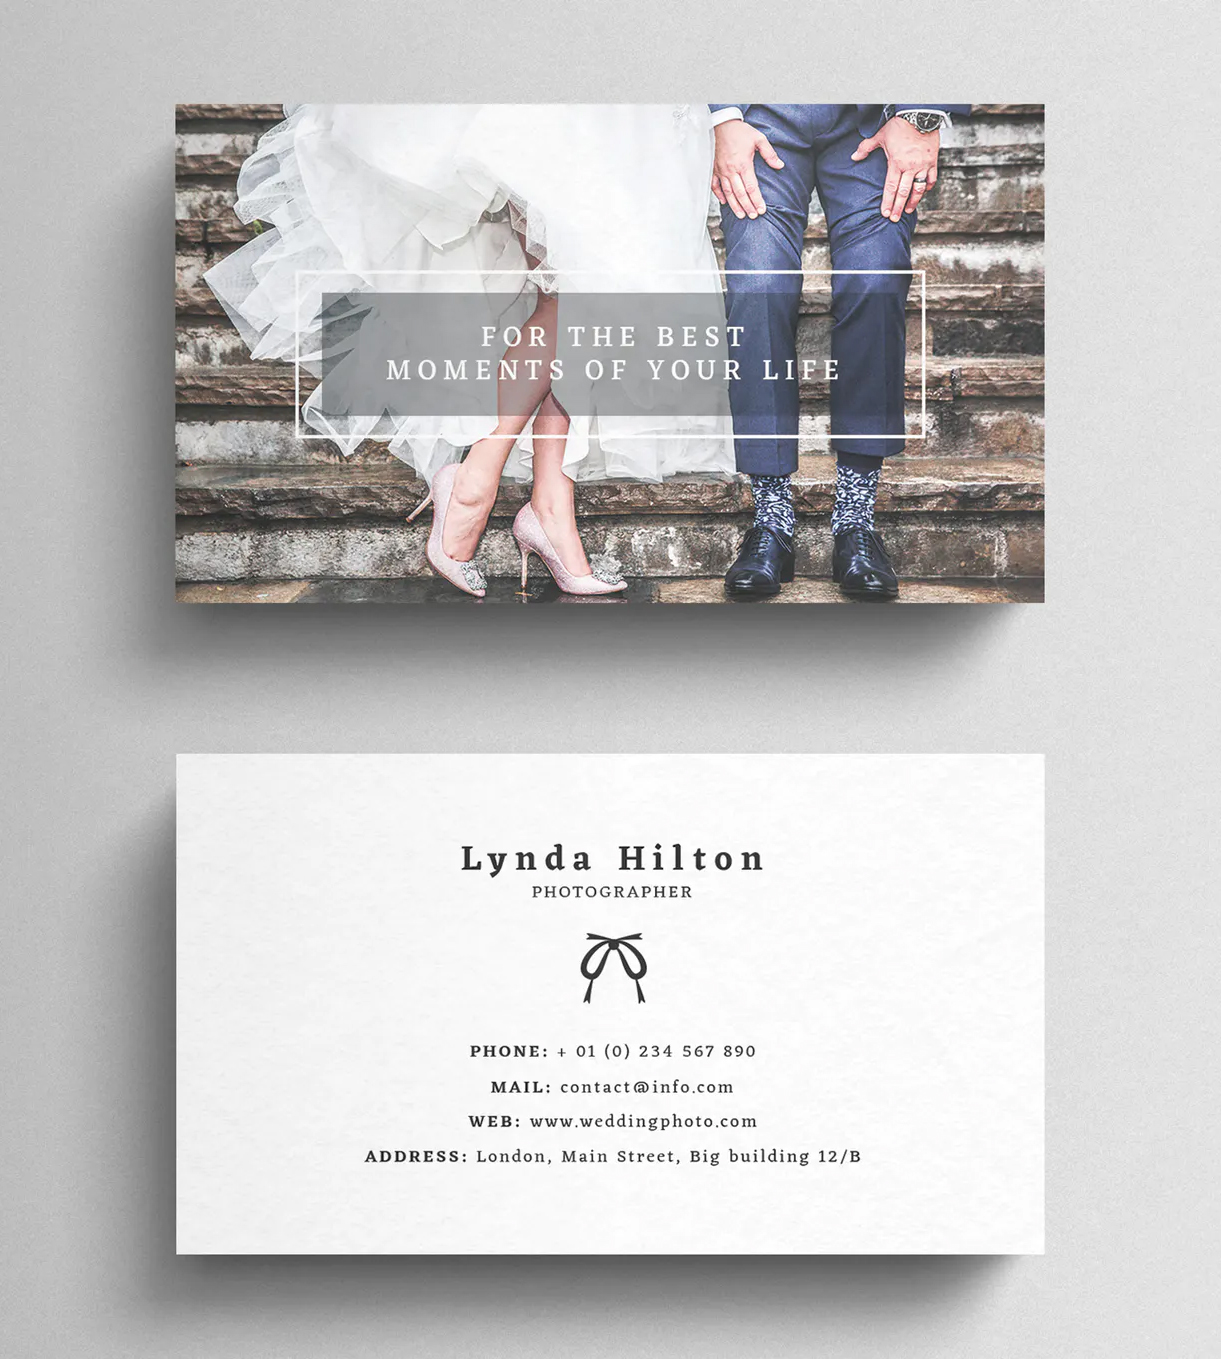 Wedding photography business card psd